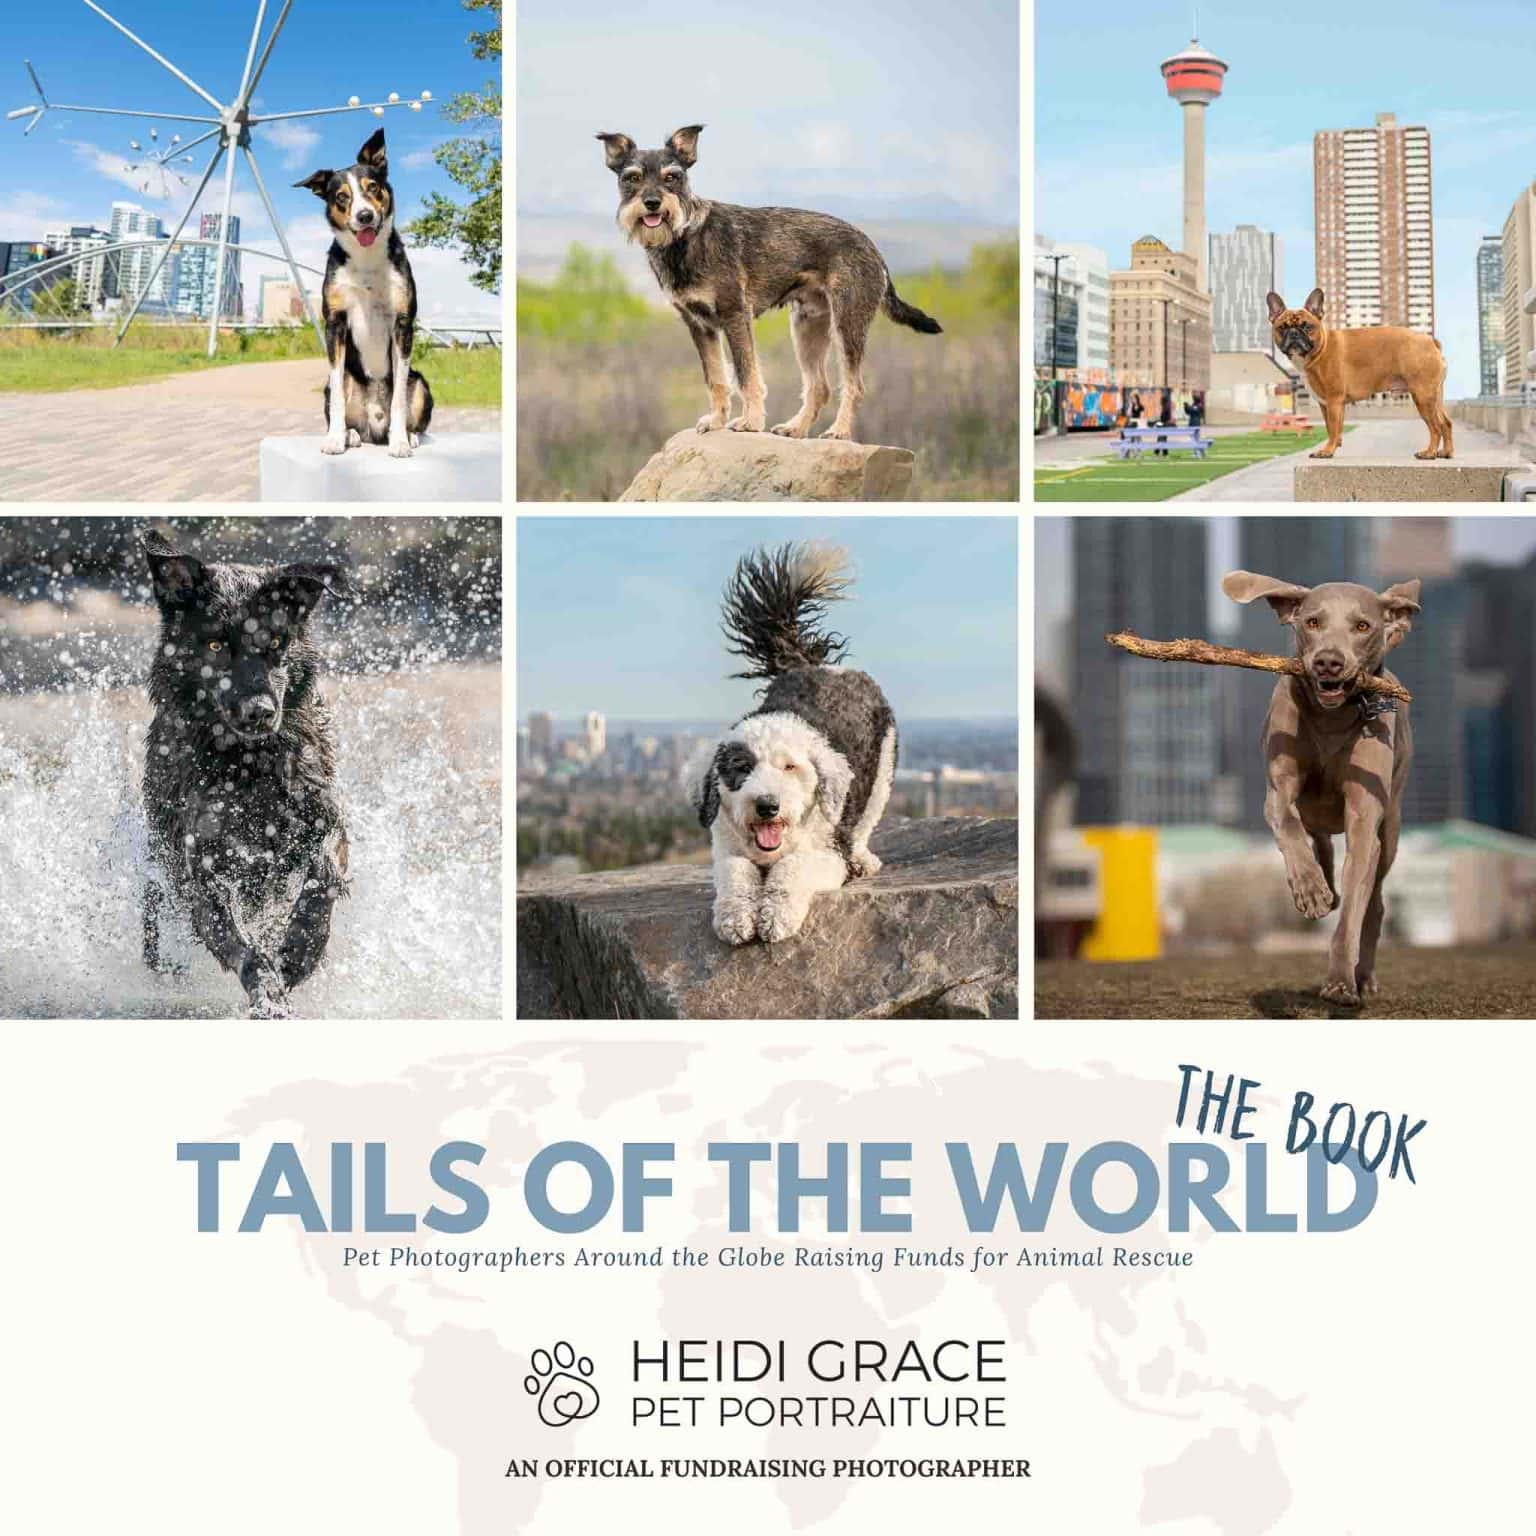 Tails of the World | Animal Rescue Fundraiser | Calgary, Alberta